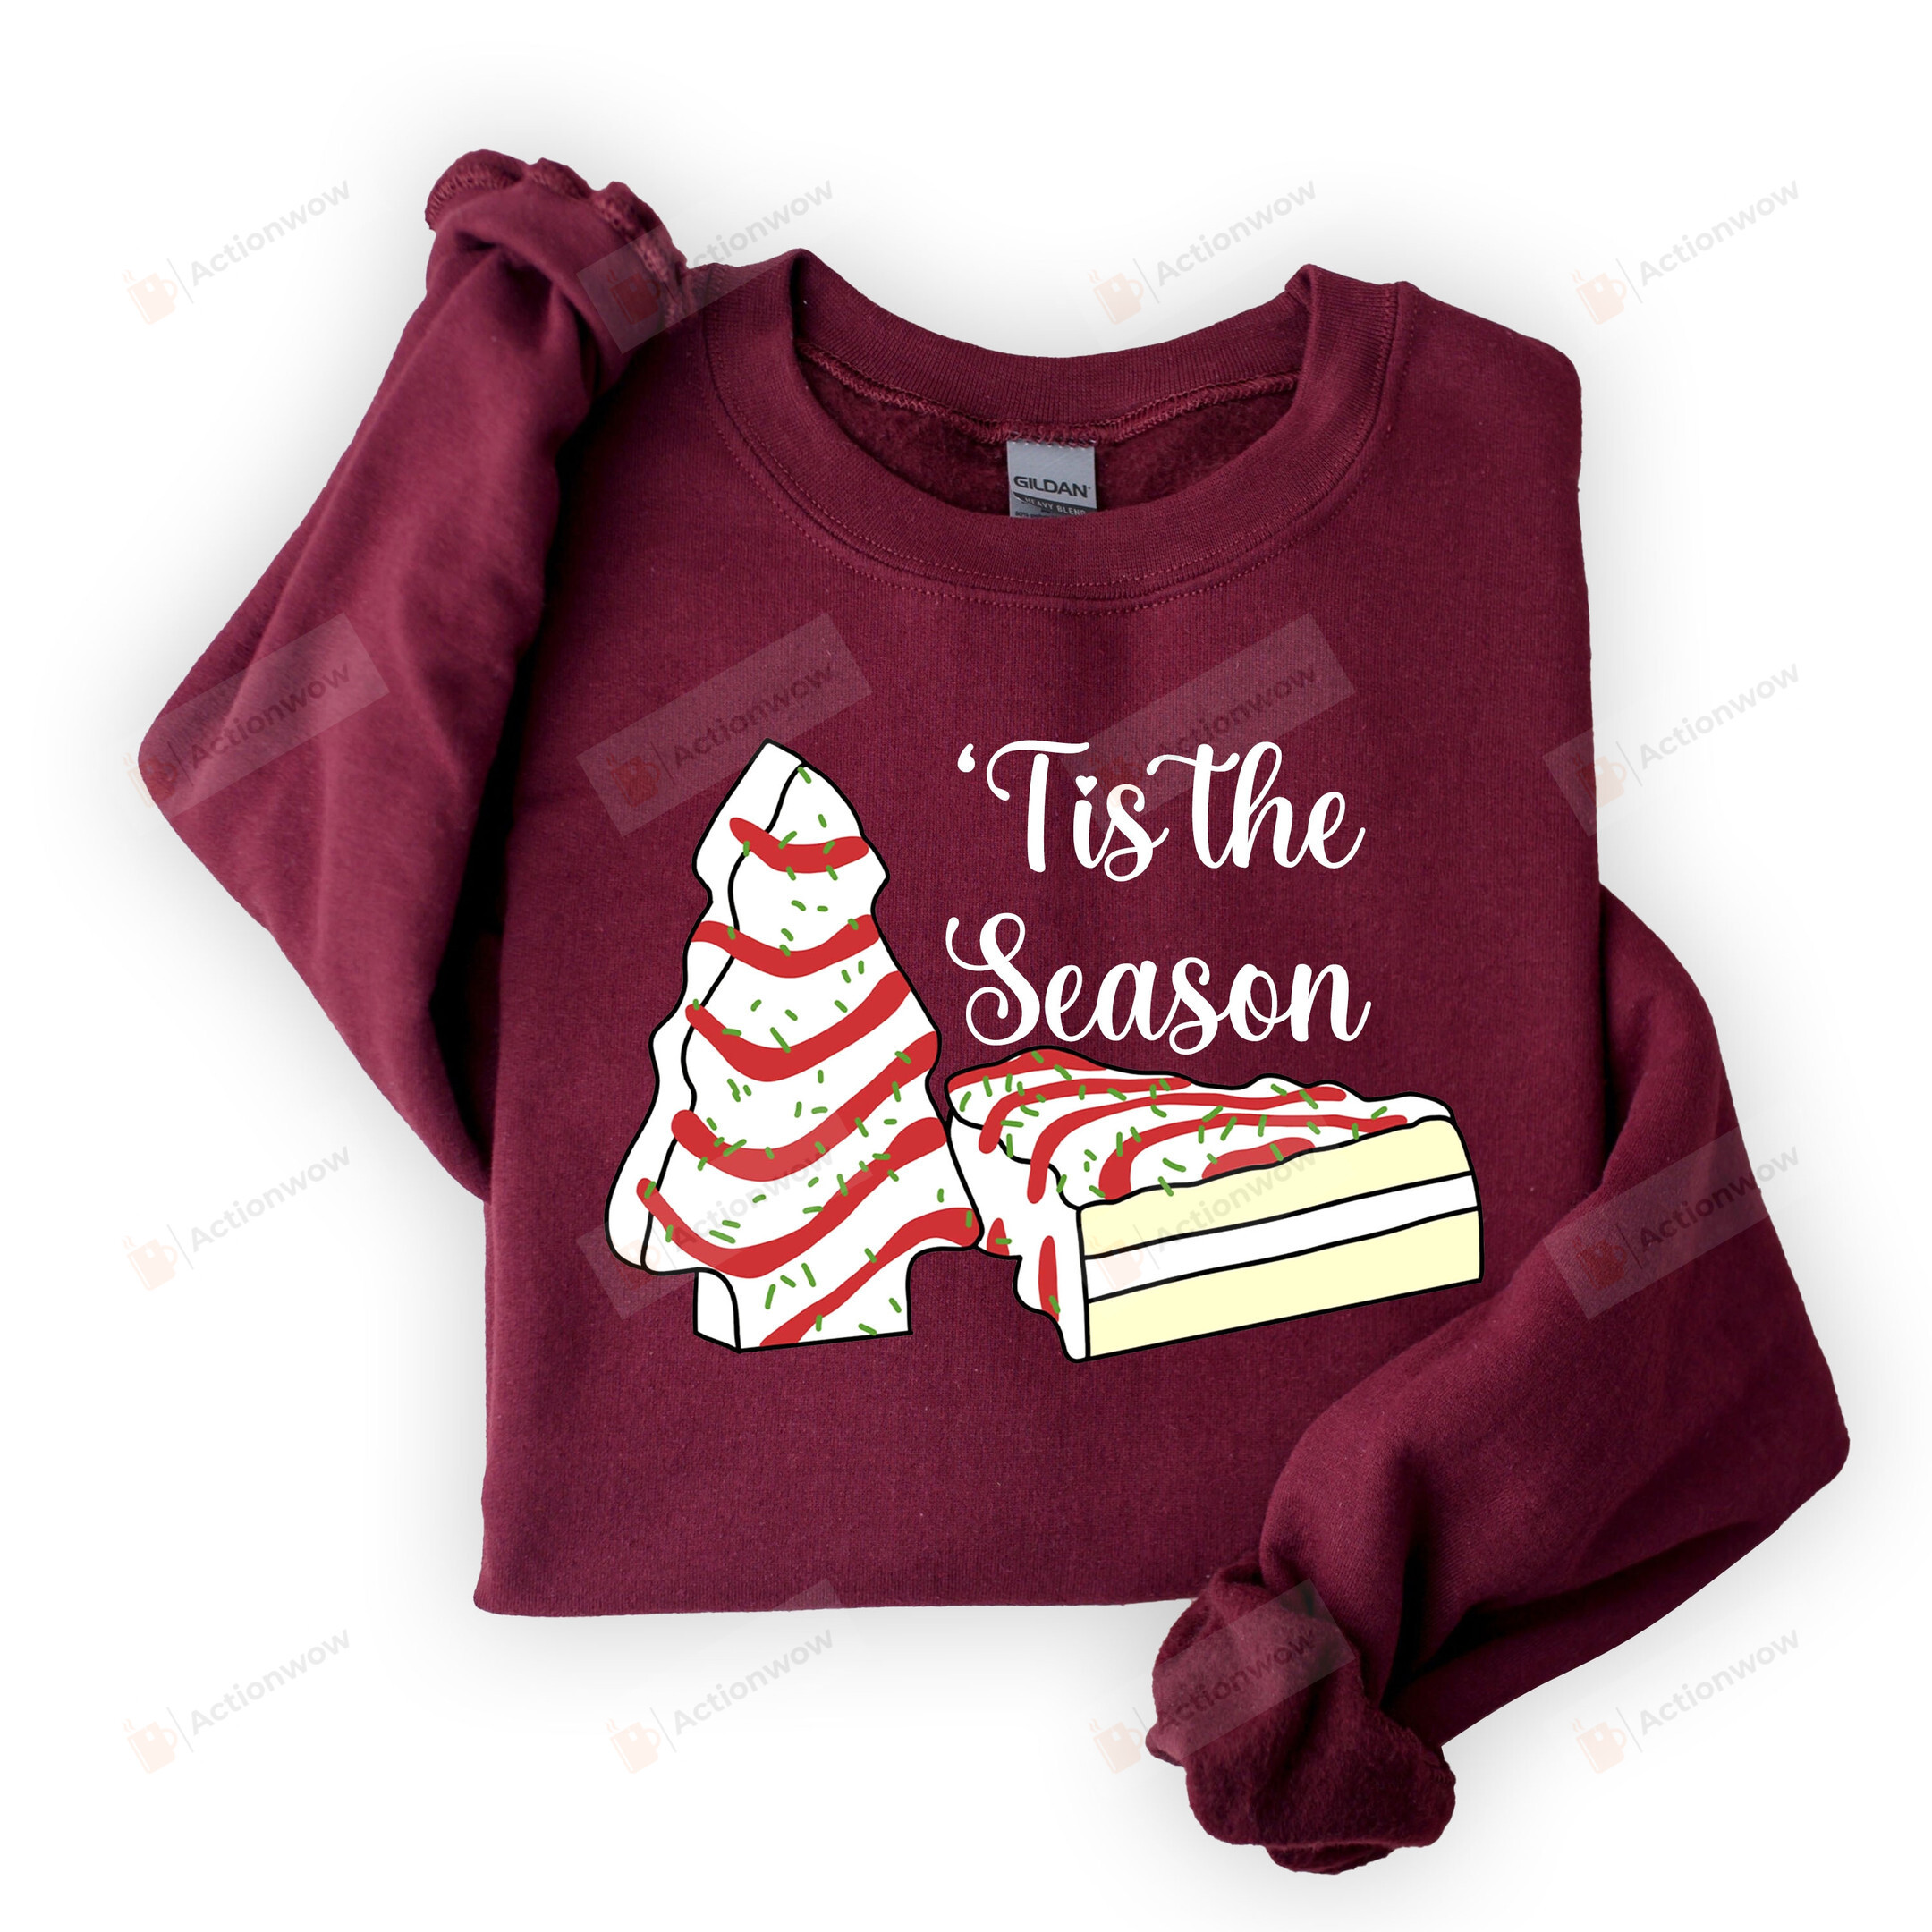 Tis The Season Sweatshirt, Christmas Cake Sweatshirt, Funny Christmas Sweatshirt For Women, Christmas Tree Cakes Sweatshirts